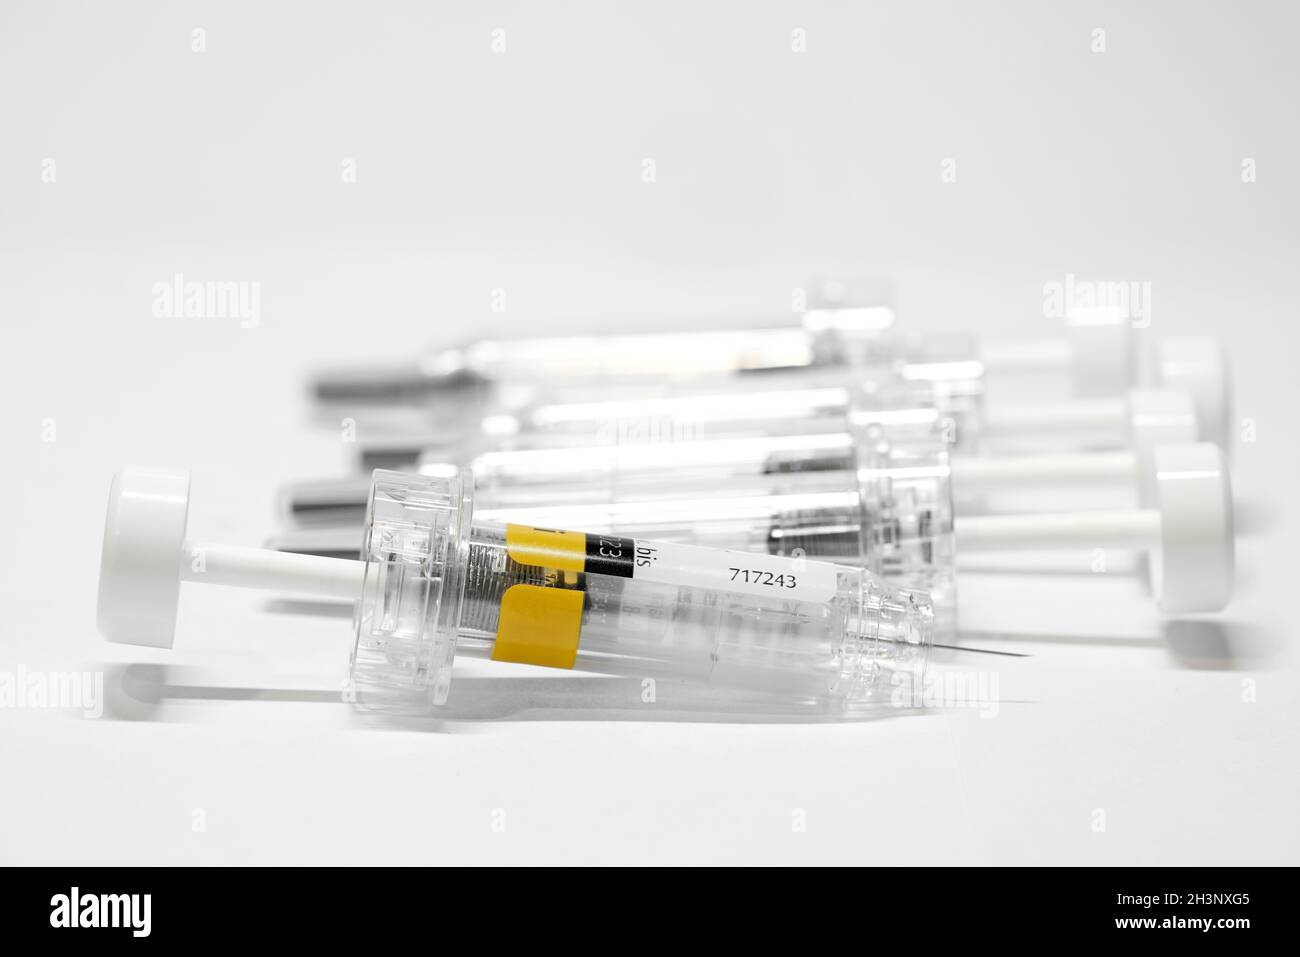 Syringe with vaccine to combat coronavirus on a table Stock Photo